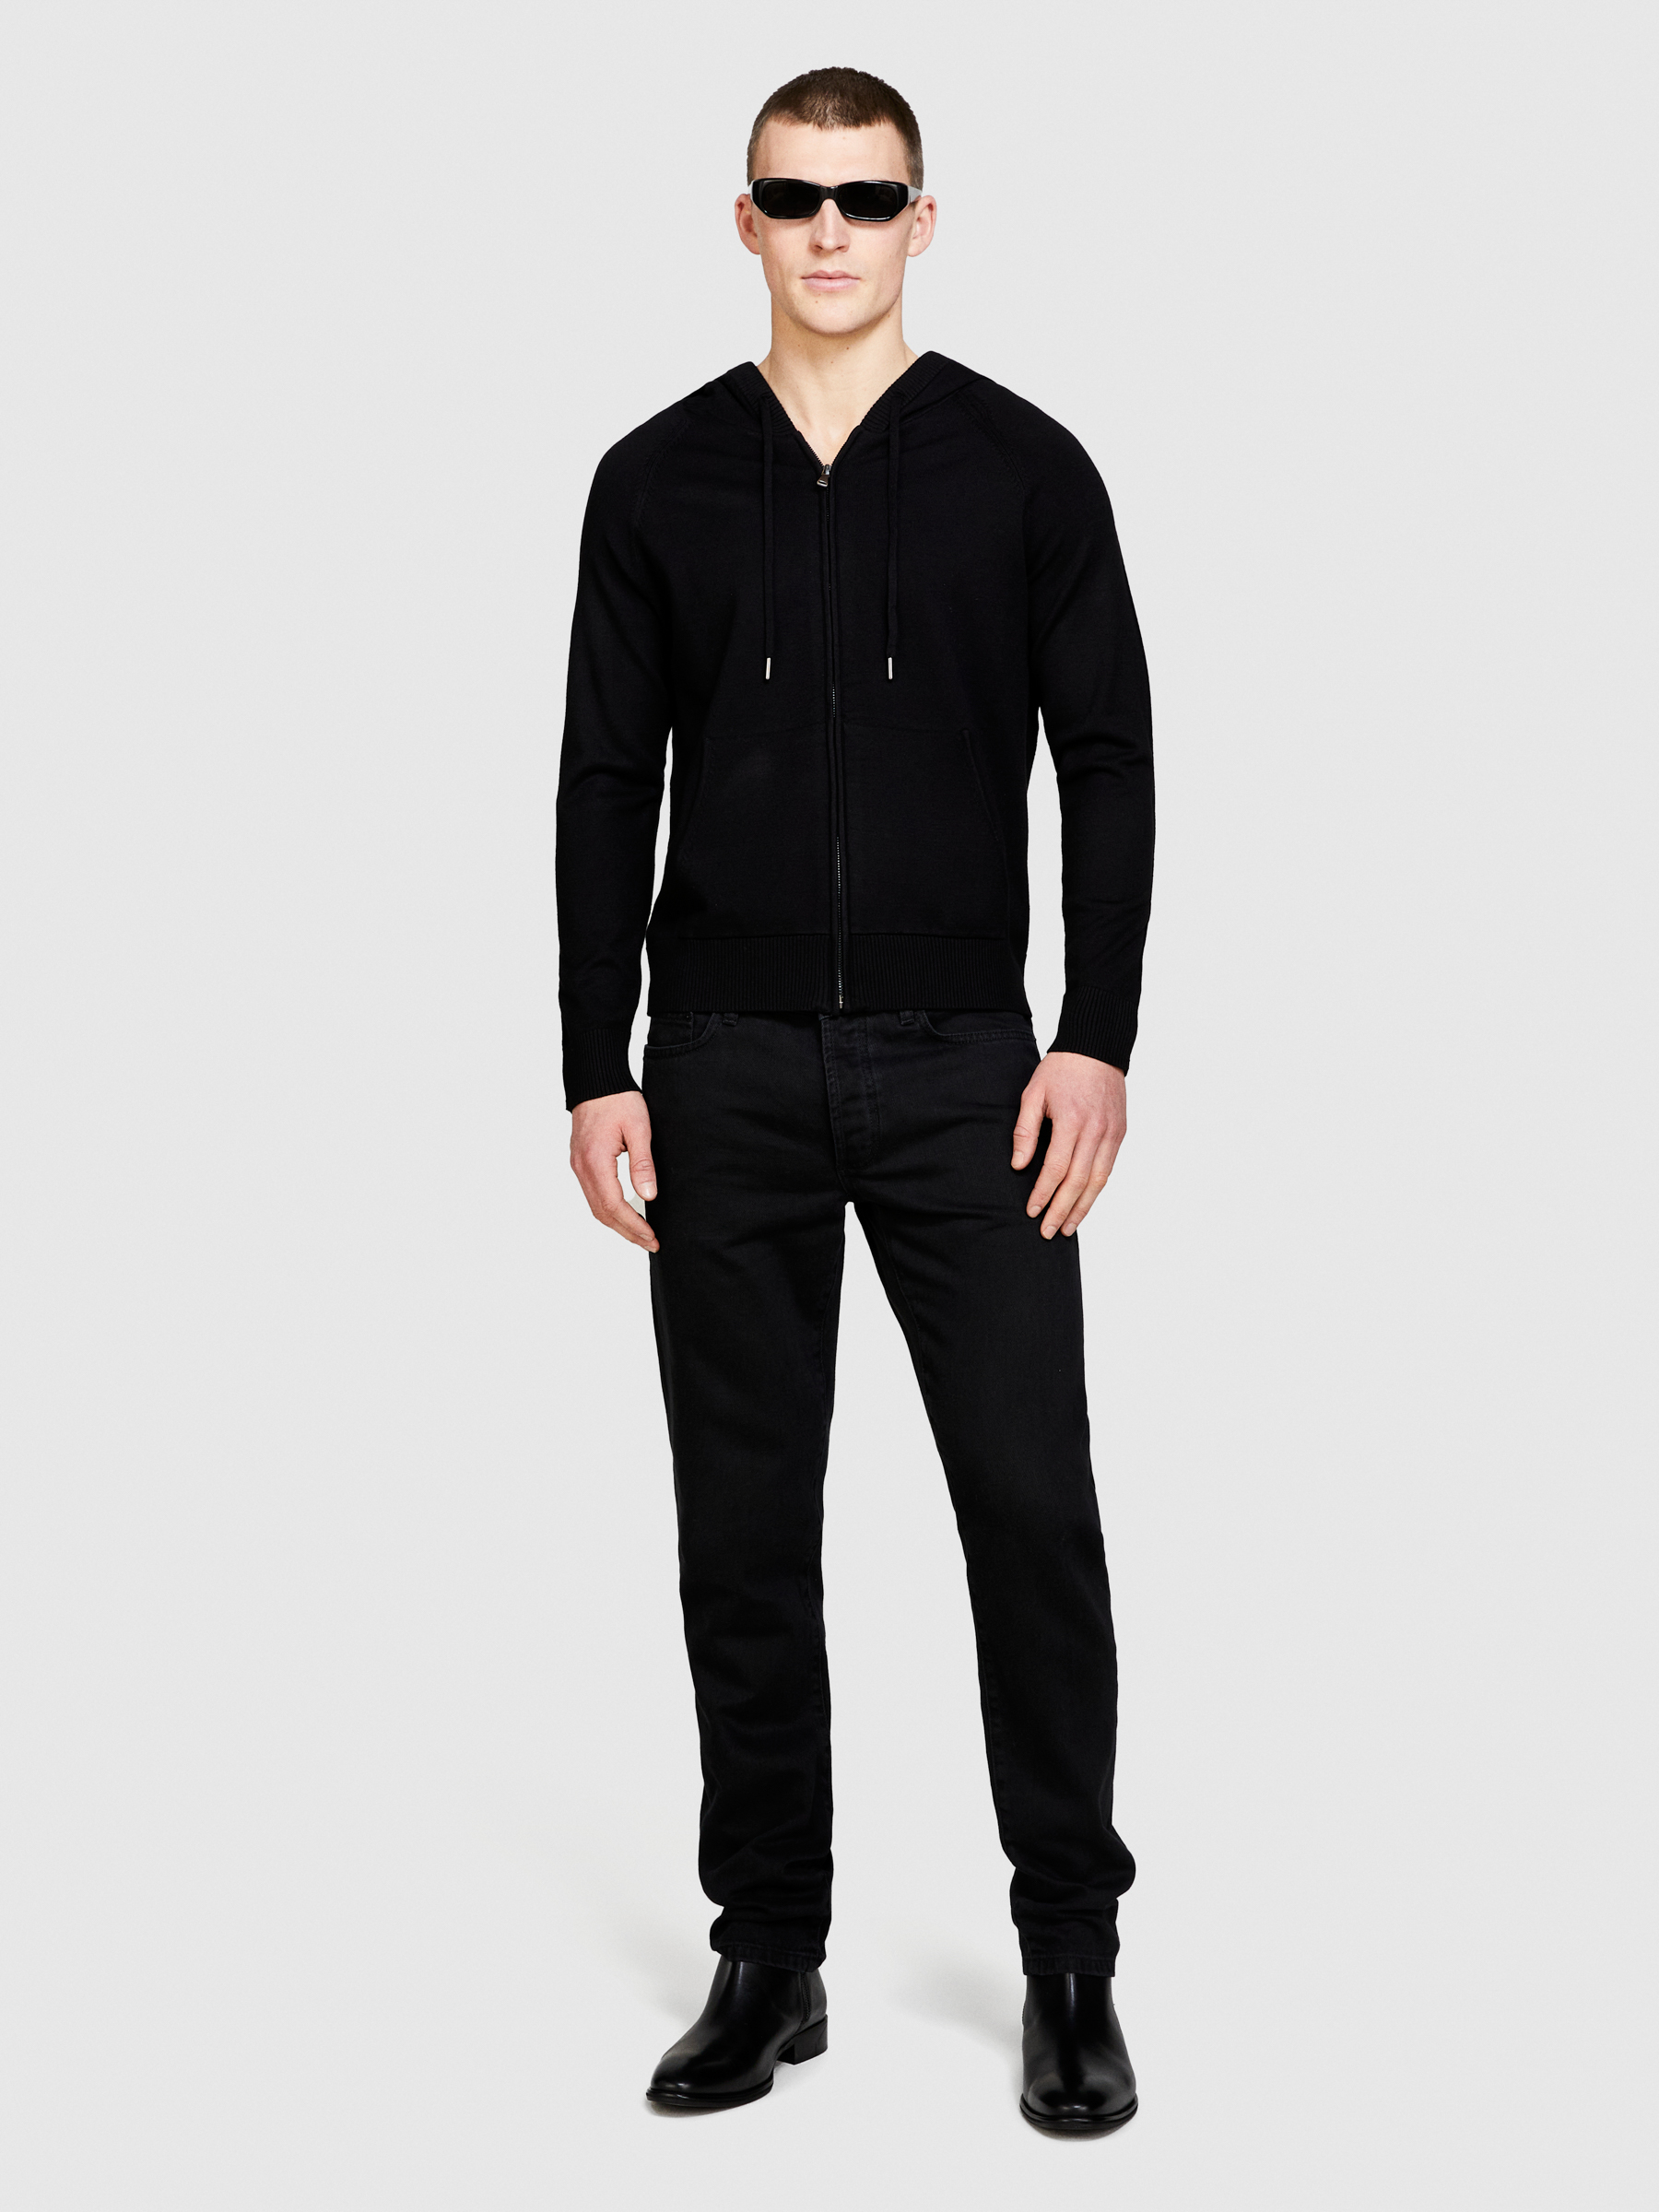 Sisley - Berlin Slim Fit Colored Jeans, Man, Black, Size: 34